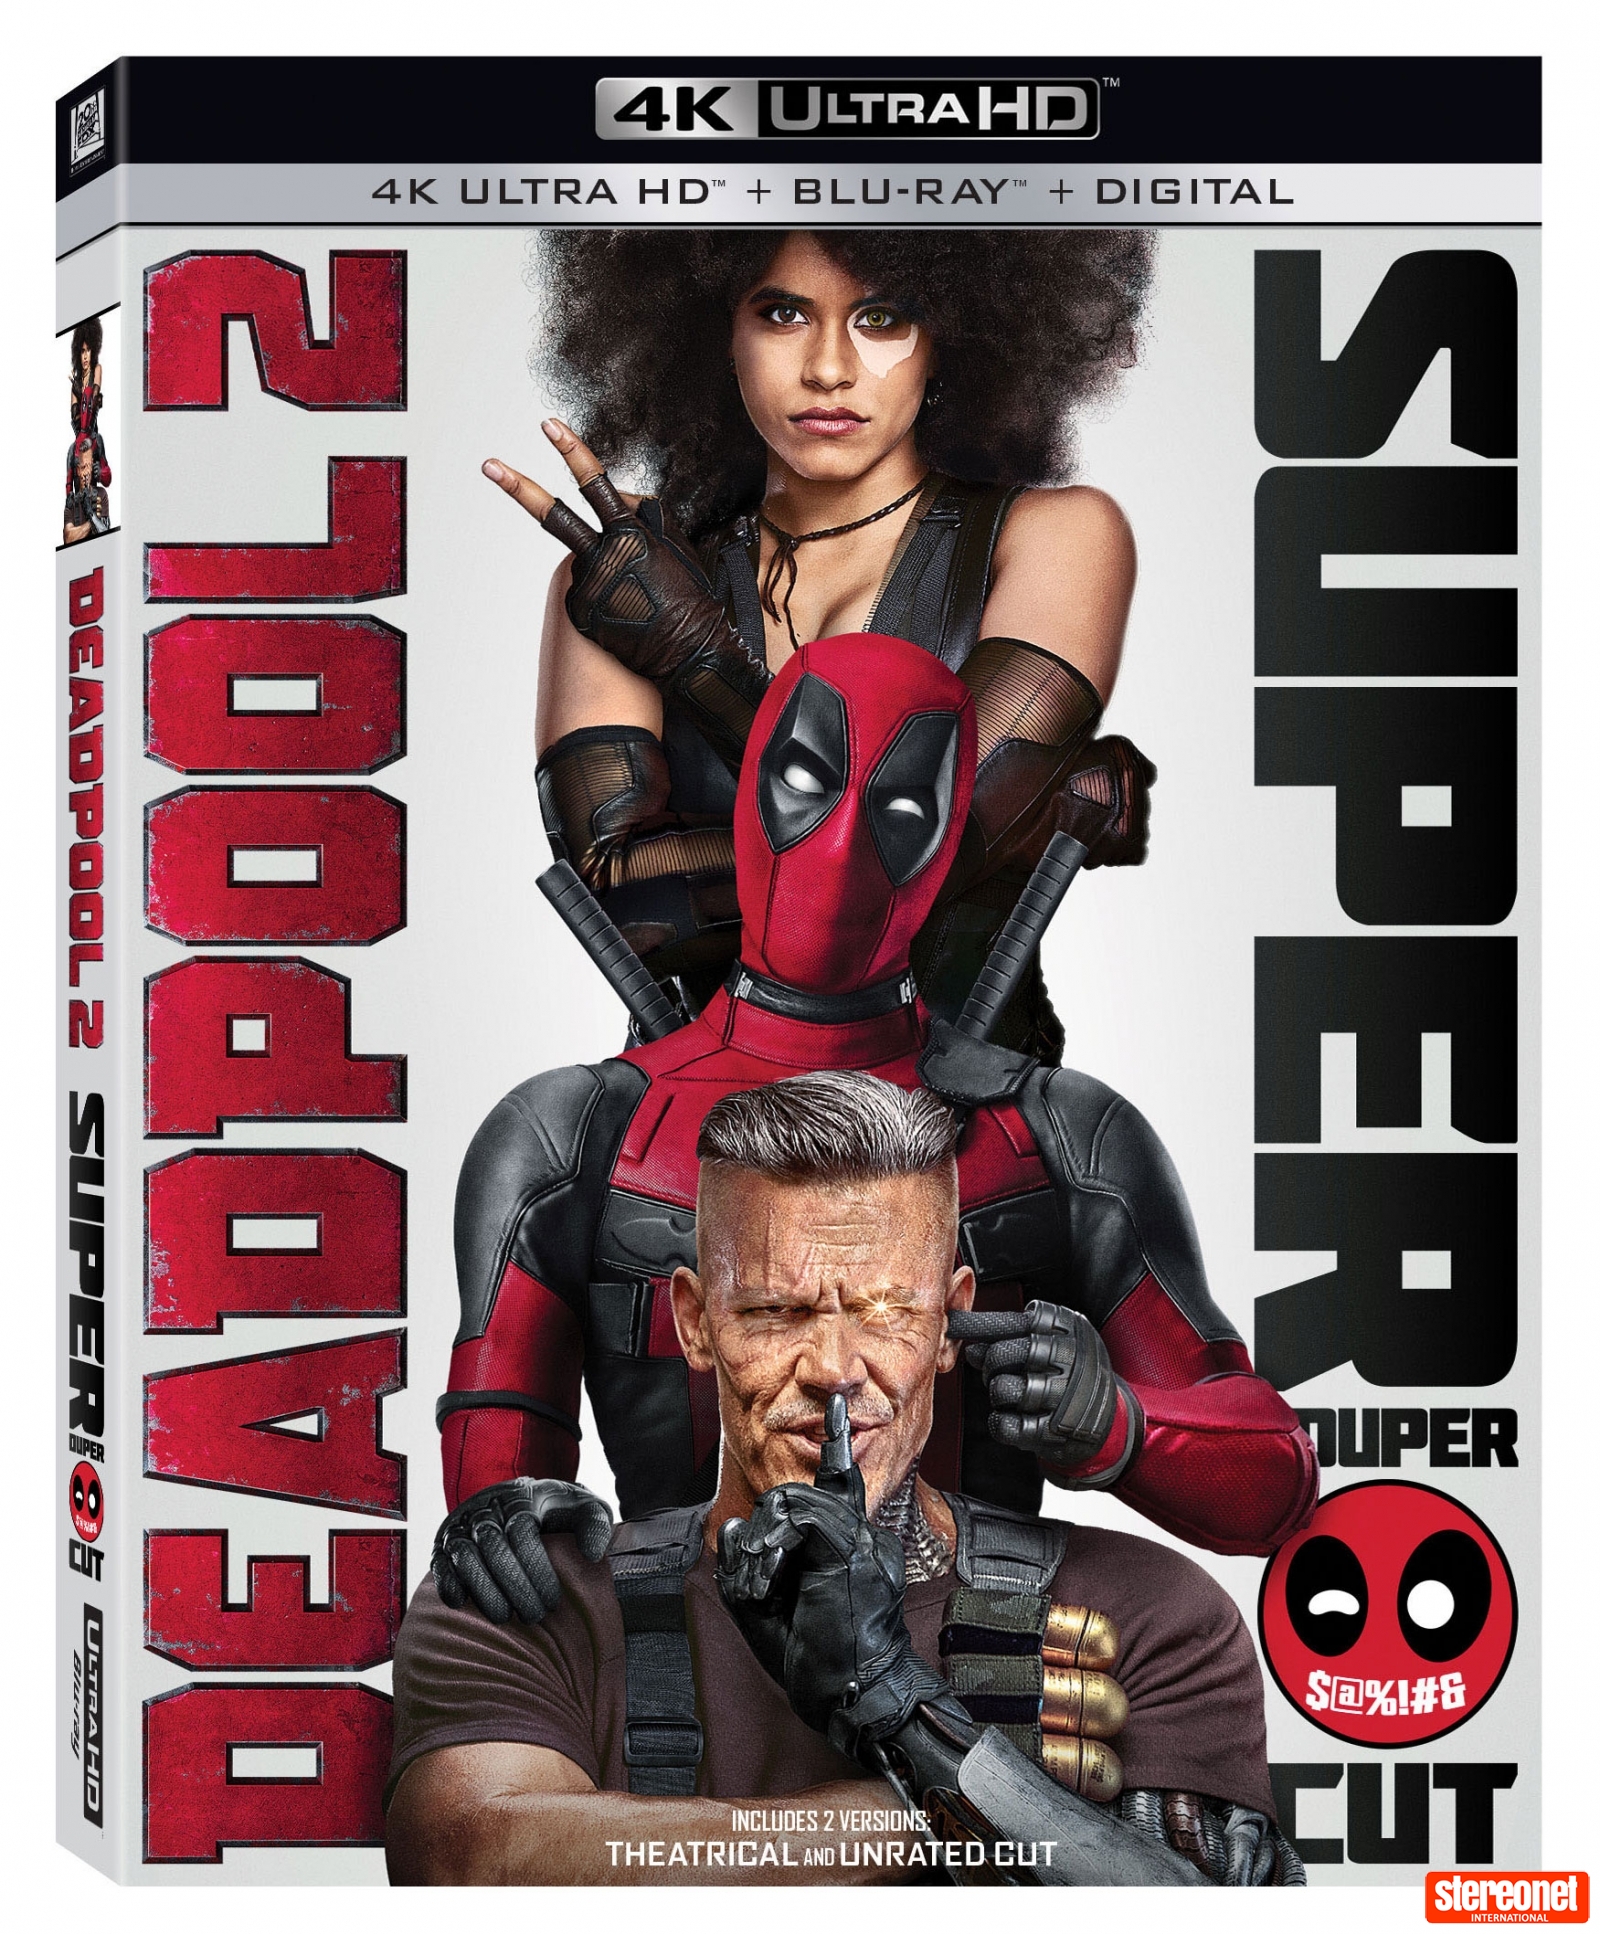 Deadpool 2 Blu-ray Review